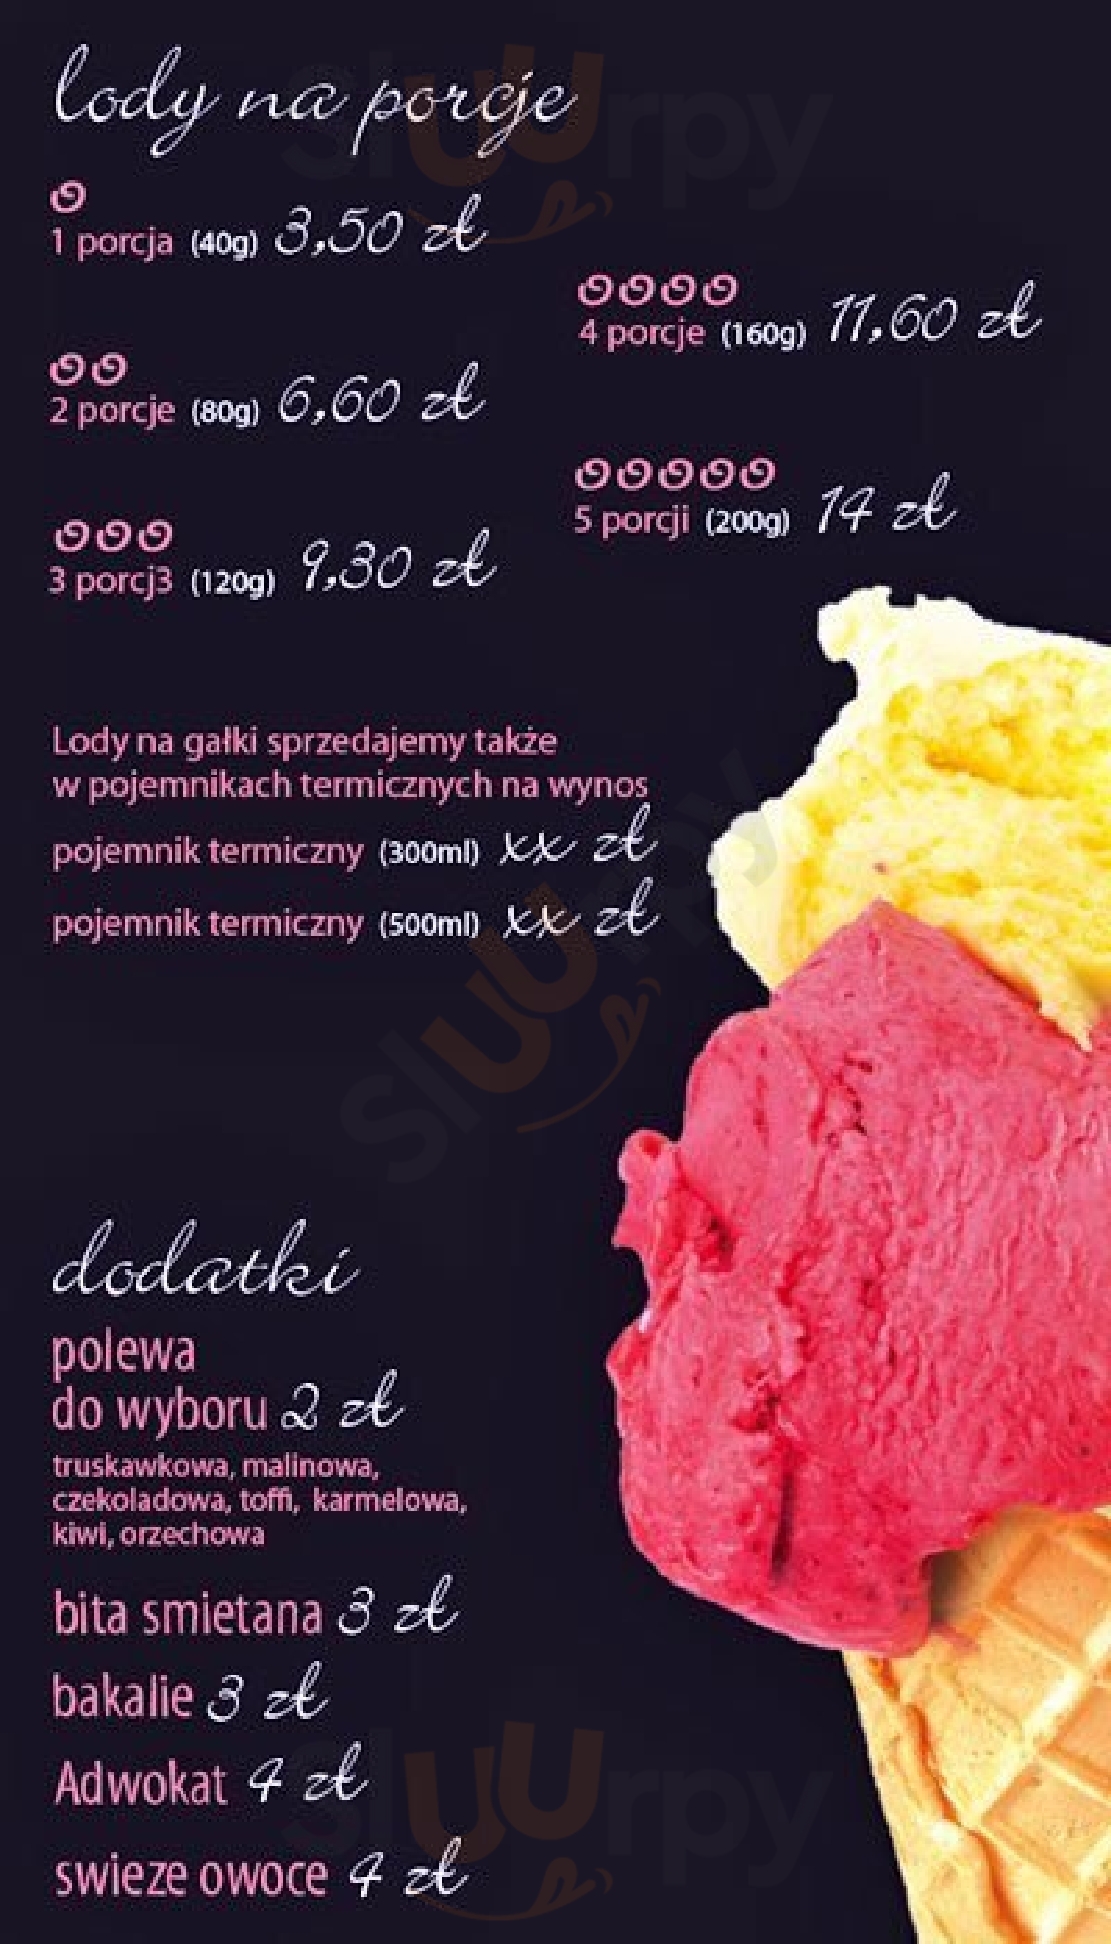 Amorinio.pl Ice Cream And Grand Cafe Wrocław Menu - 1